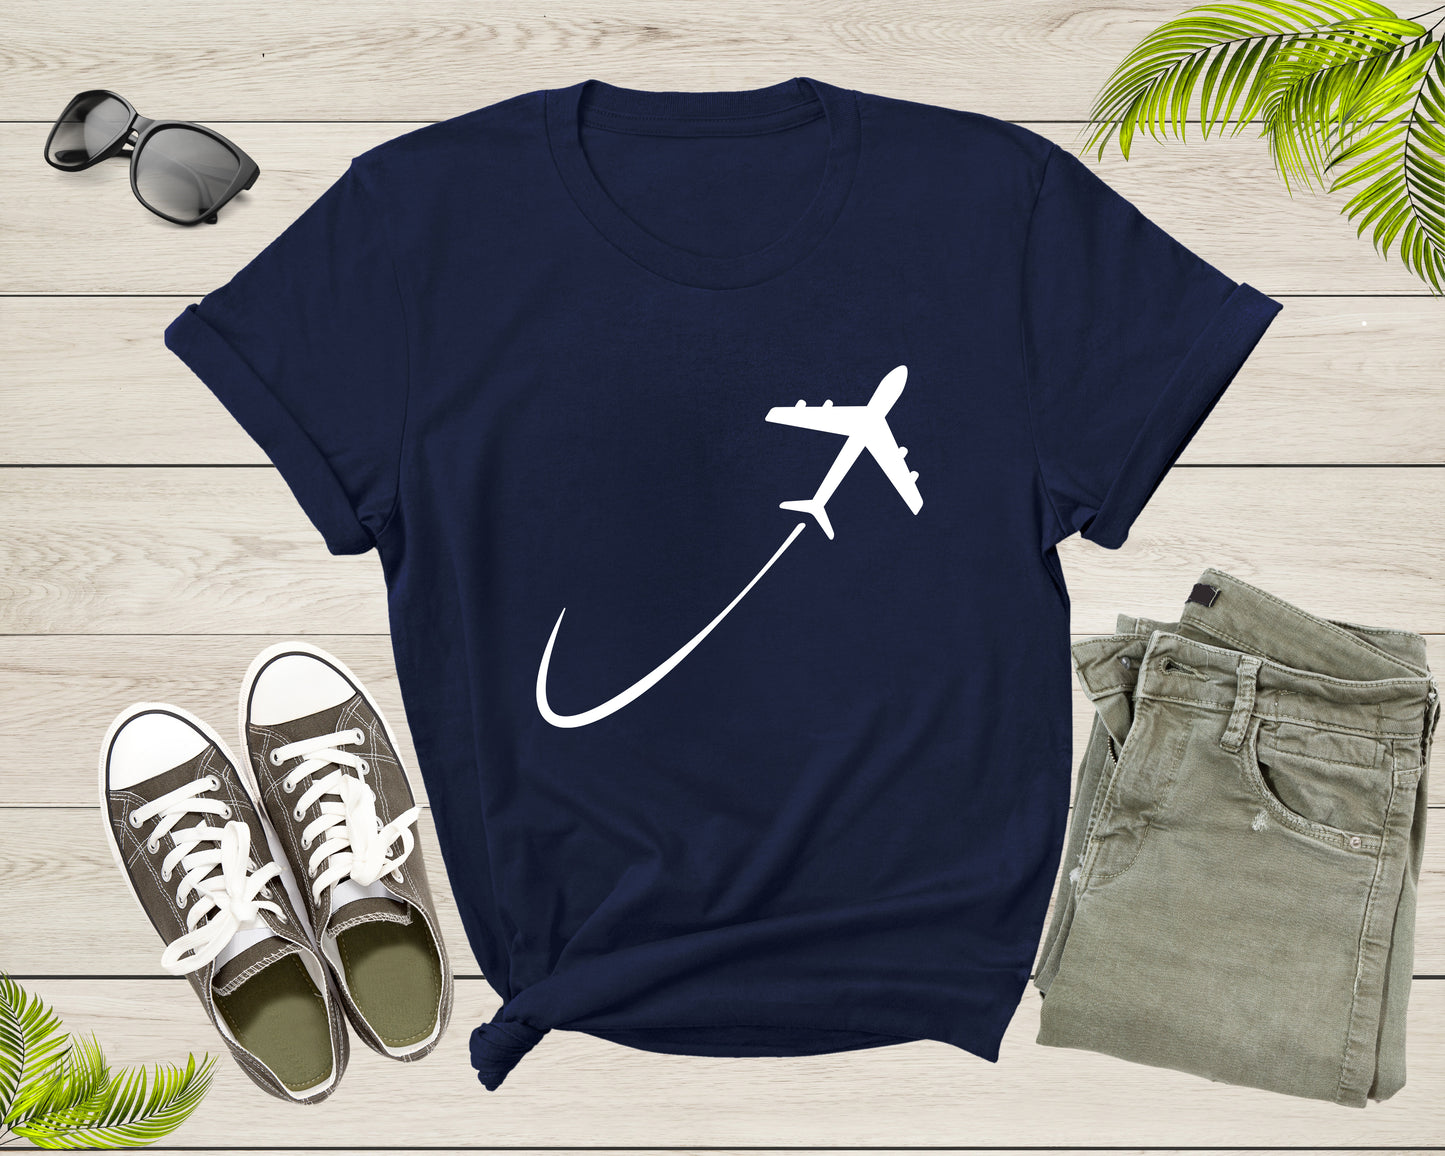 Plane Airplane Lover Pilot Gift For Men Women Kids Boy Girl T-Shirt Plane Lover Gift T Shirt for Teens Youth Graphic Aviator Tshirt